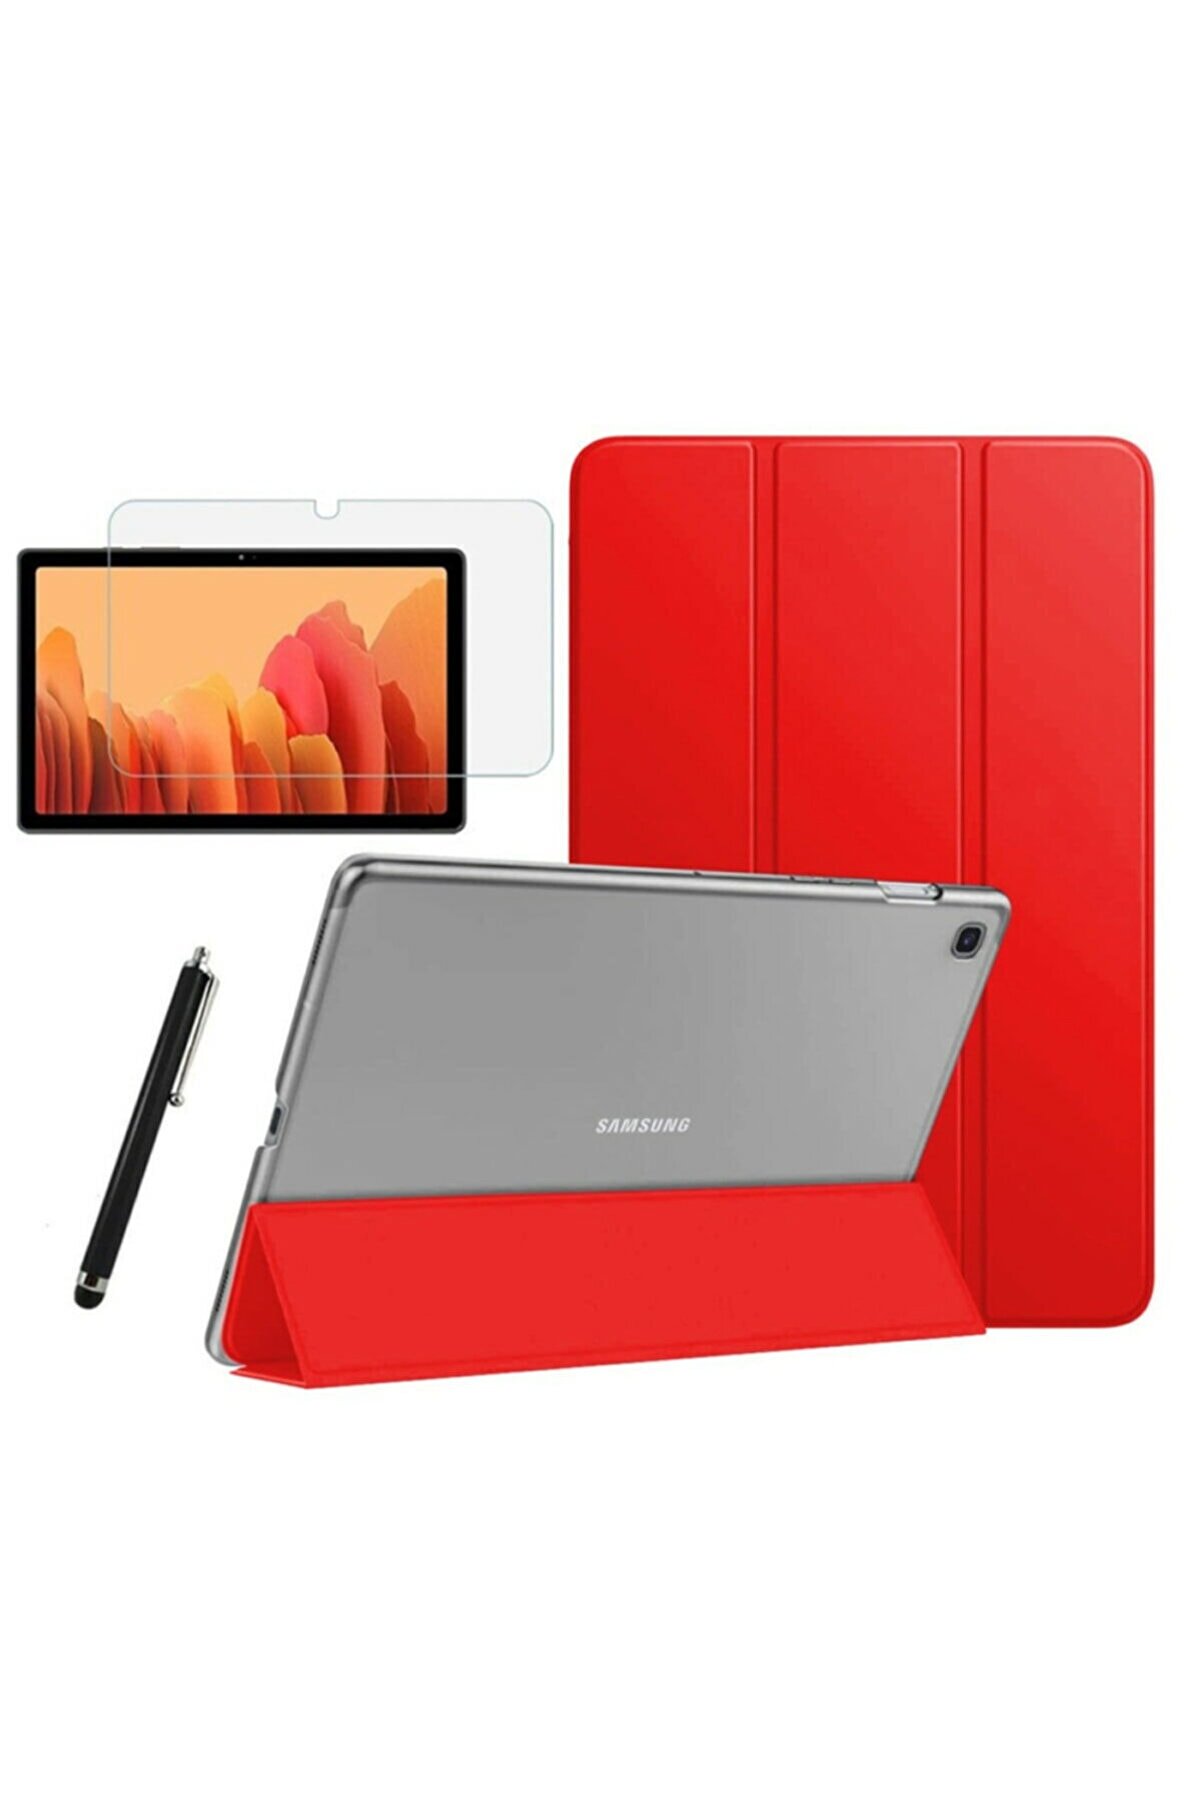 Fibaks Samsung Galaxy Tab S7 Fe Lte T737 Smart Kapak Tablet Kılıfı Ekran Koruyucu Kalem 12.4 Inç